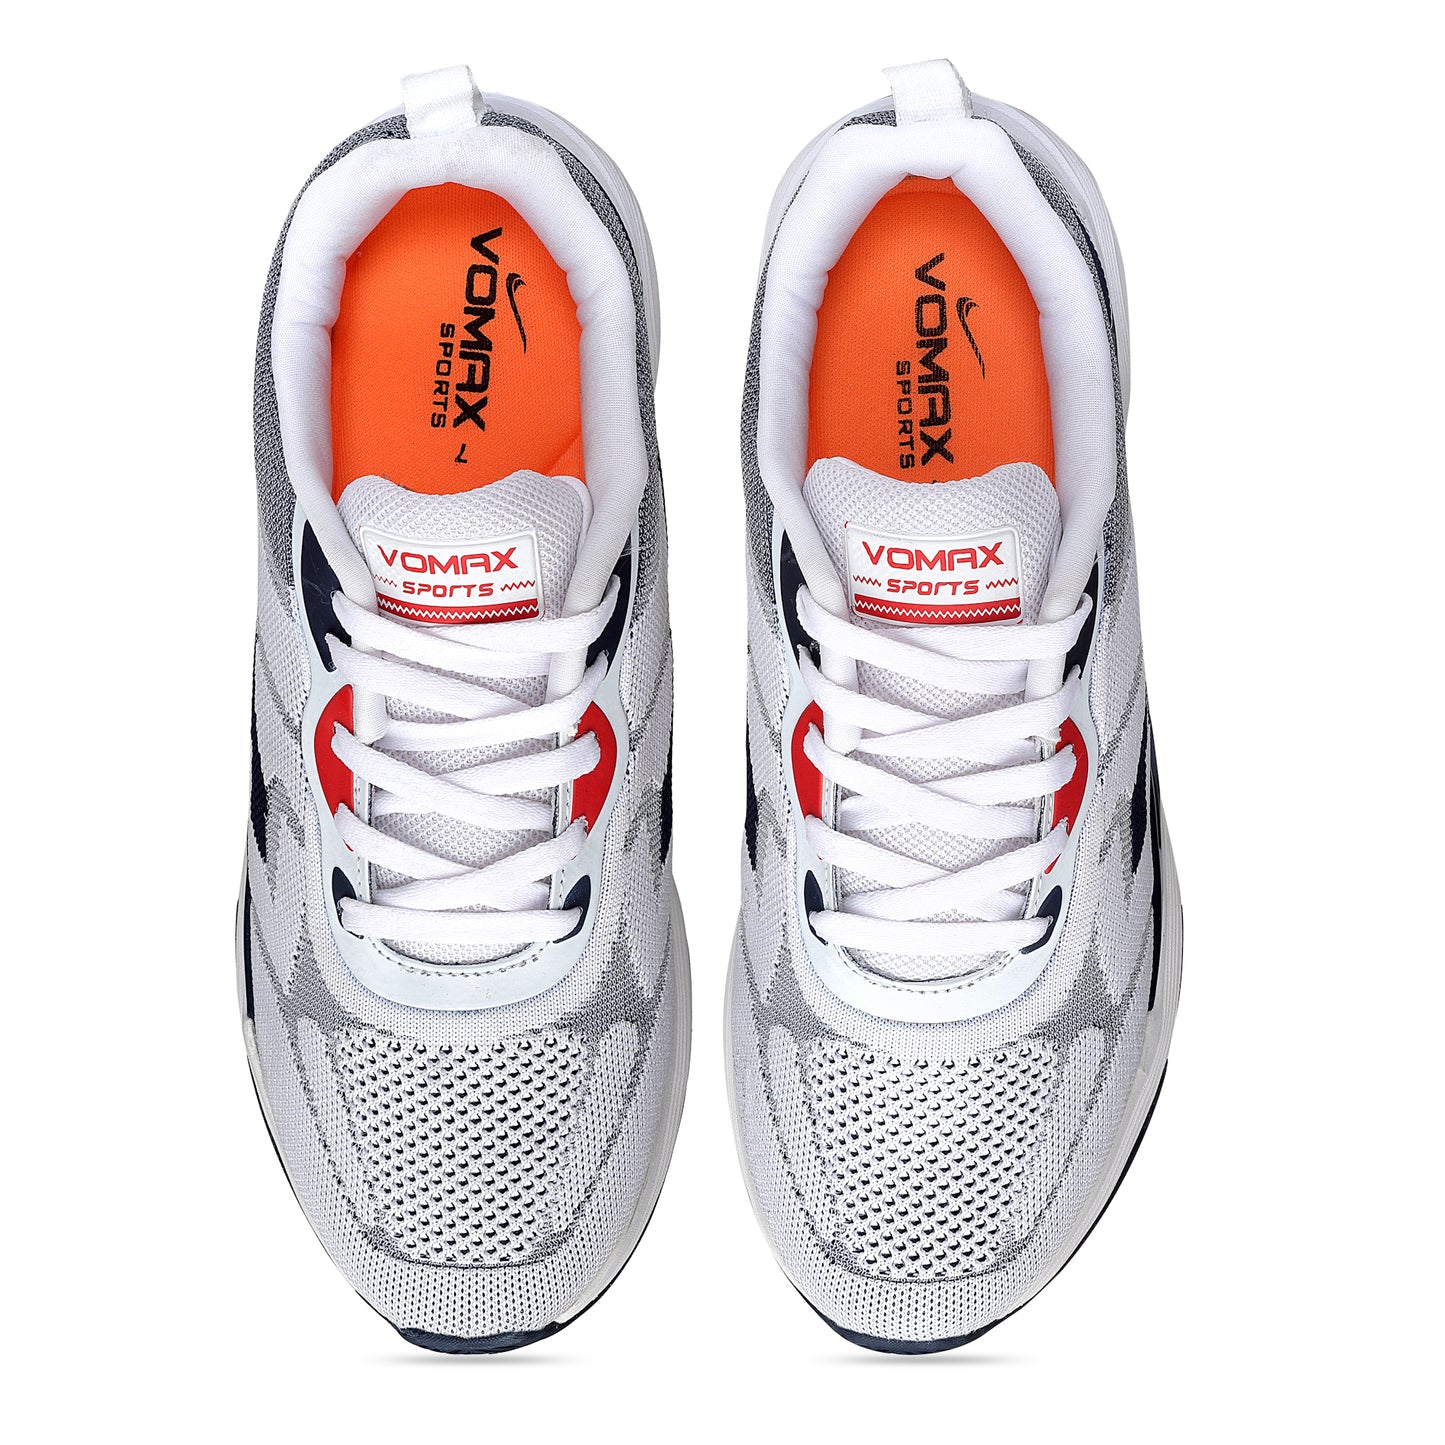 Vomax Sports PL-5001 Enhanced Durability Running Shoes for Men